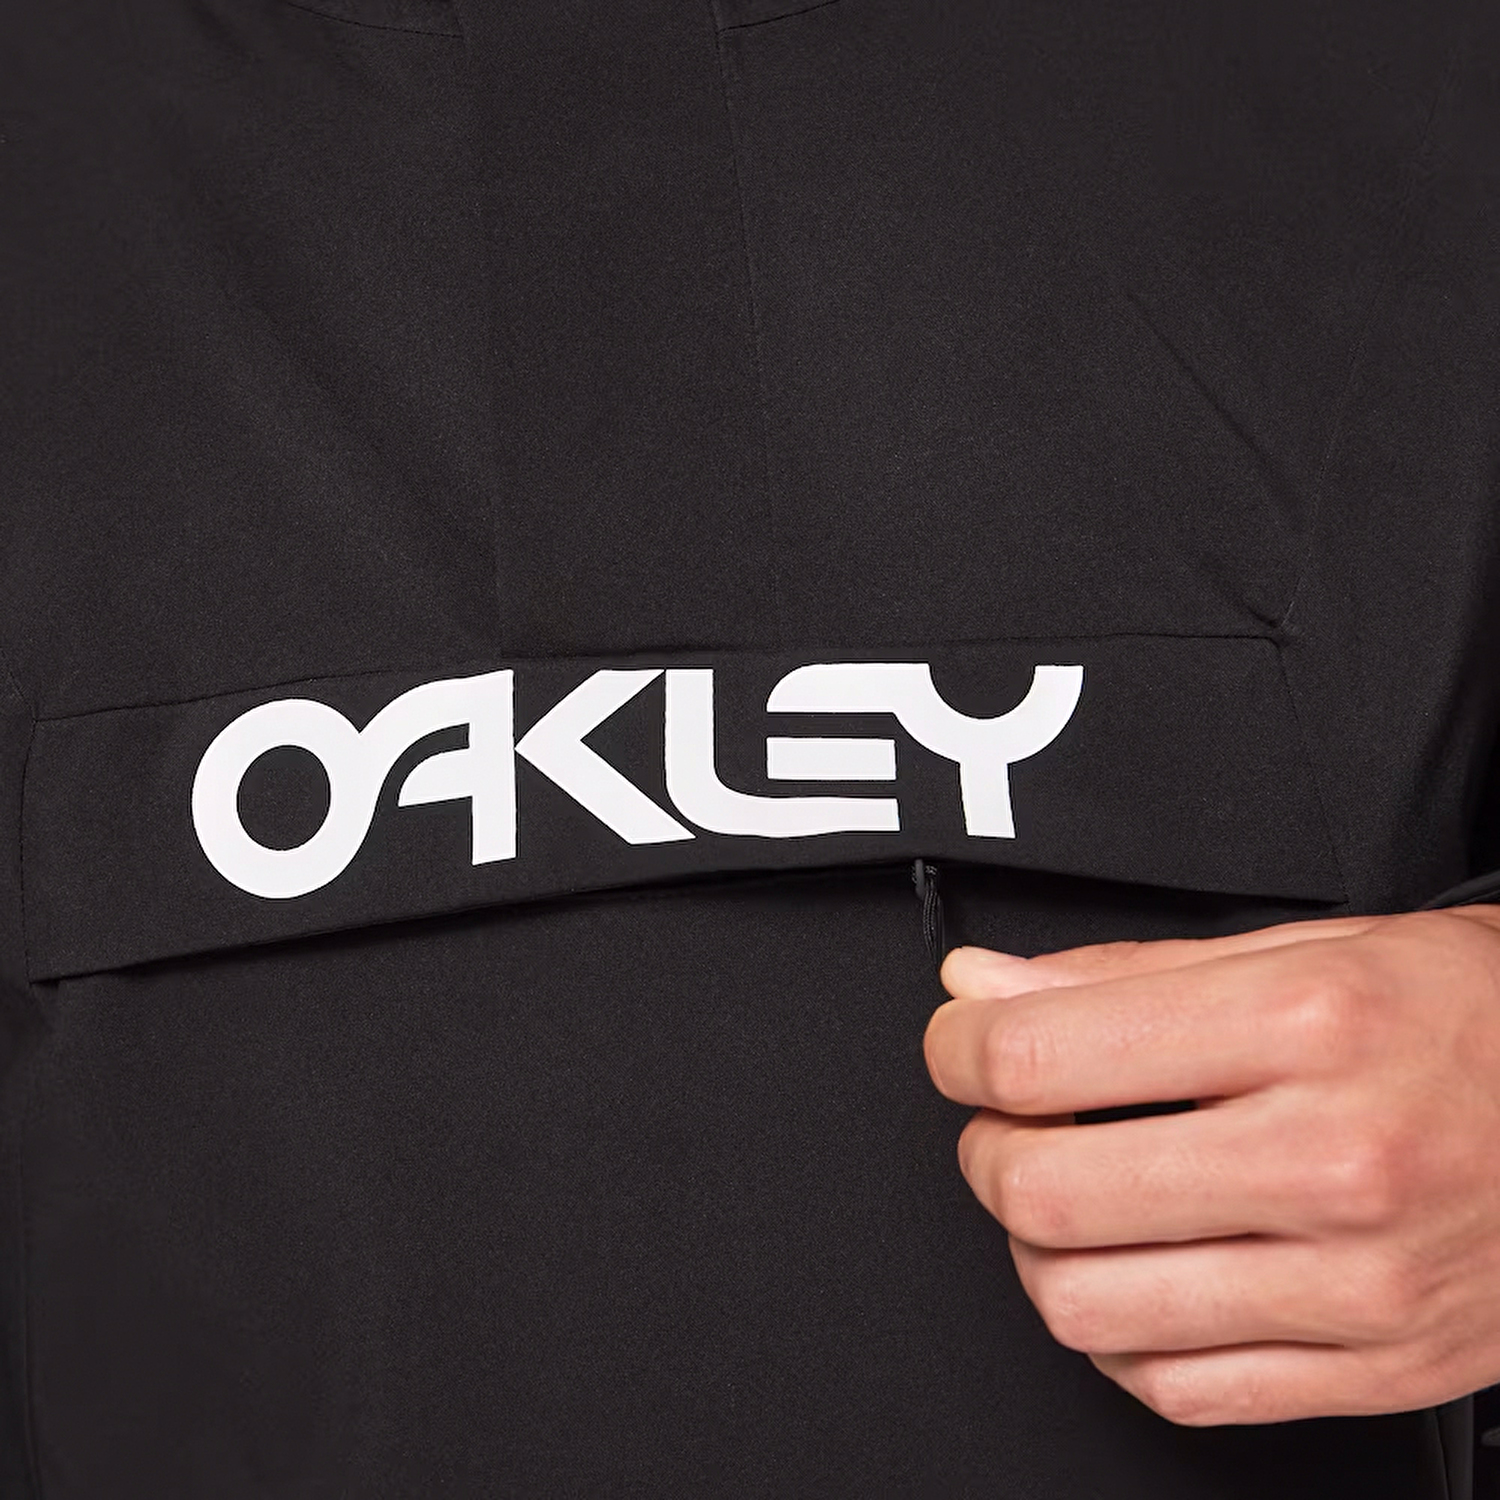 Oakley Tnp Tbt Insulated Anorak Erkek Kayak Montu